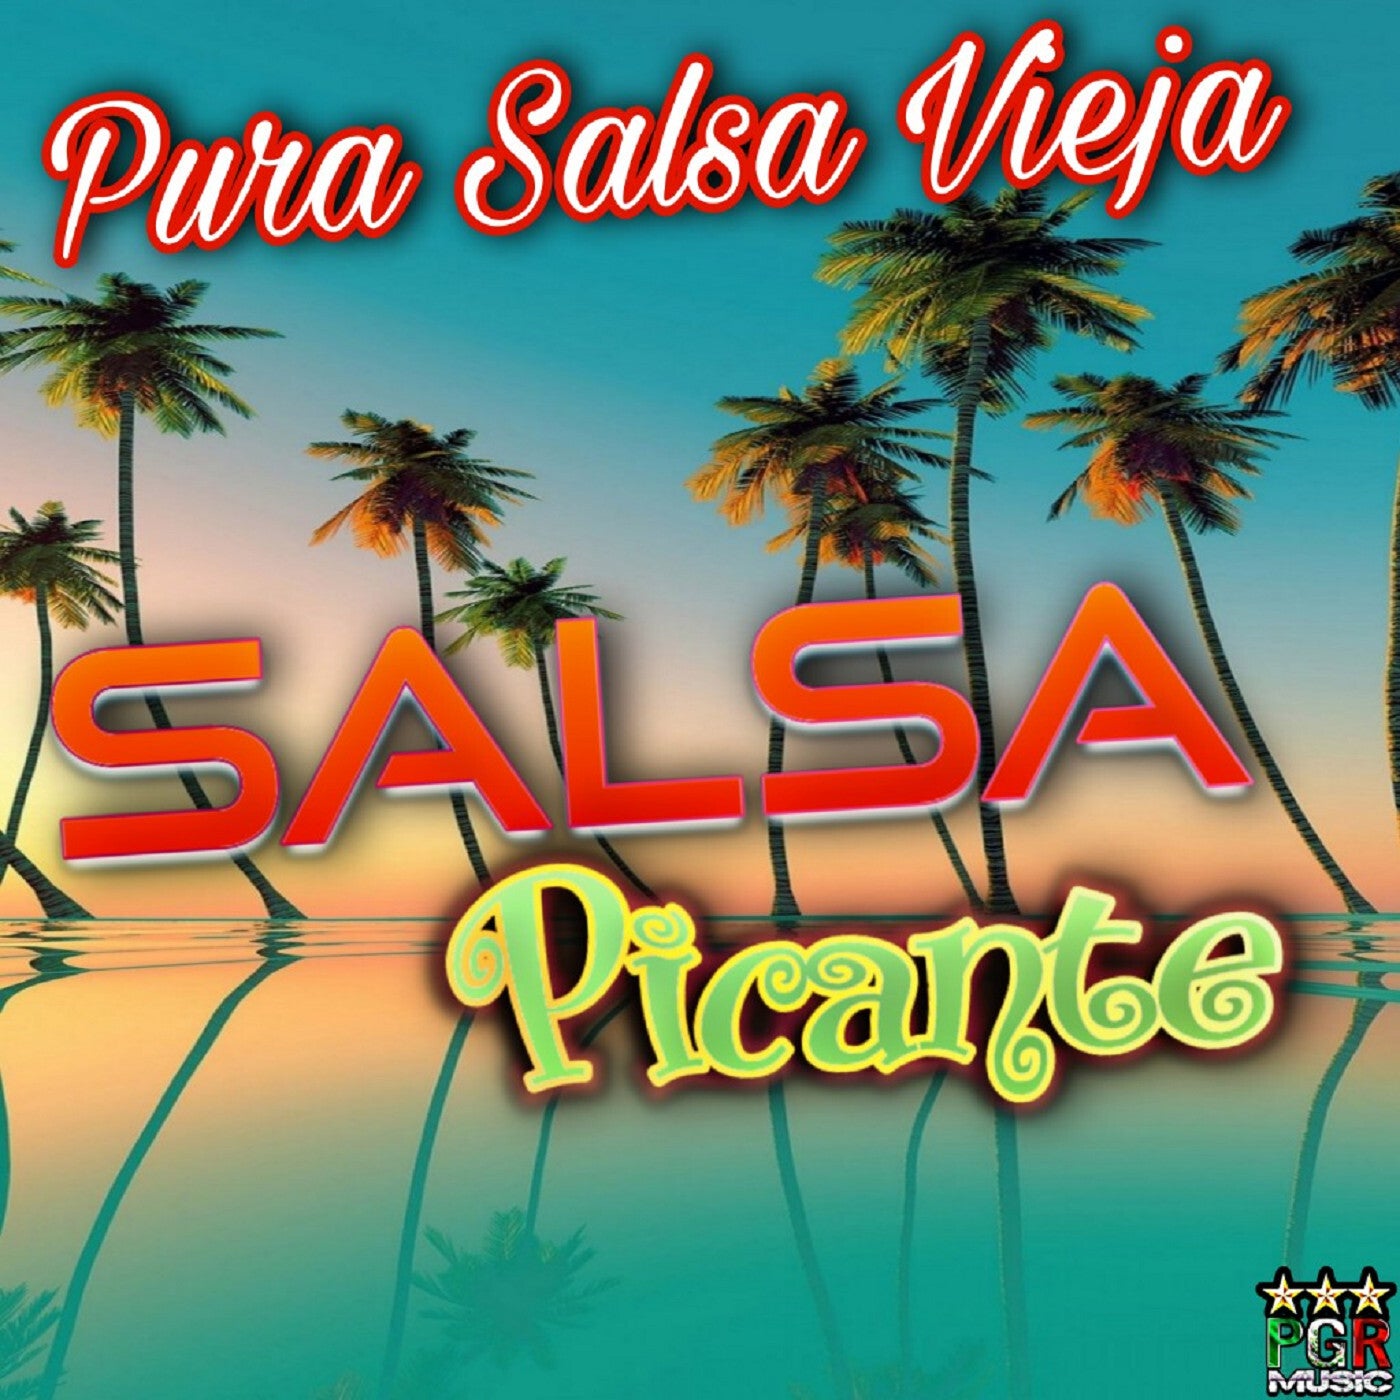 Pura Salsa Vieja by Salsa Mix, Salsa Picante and Salsa Clasica on ...